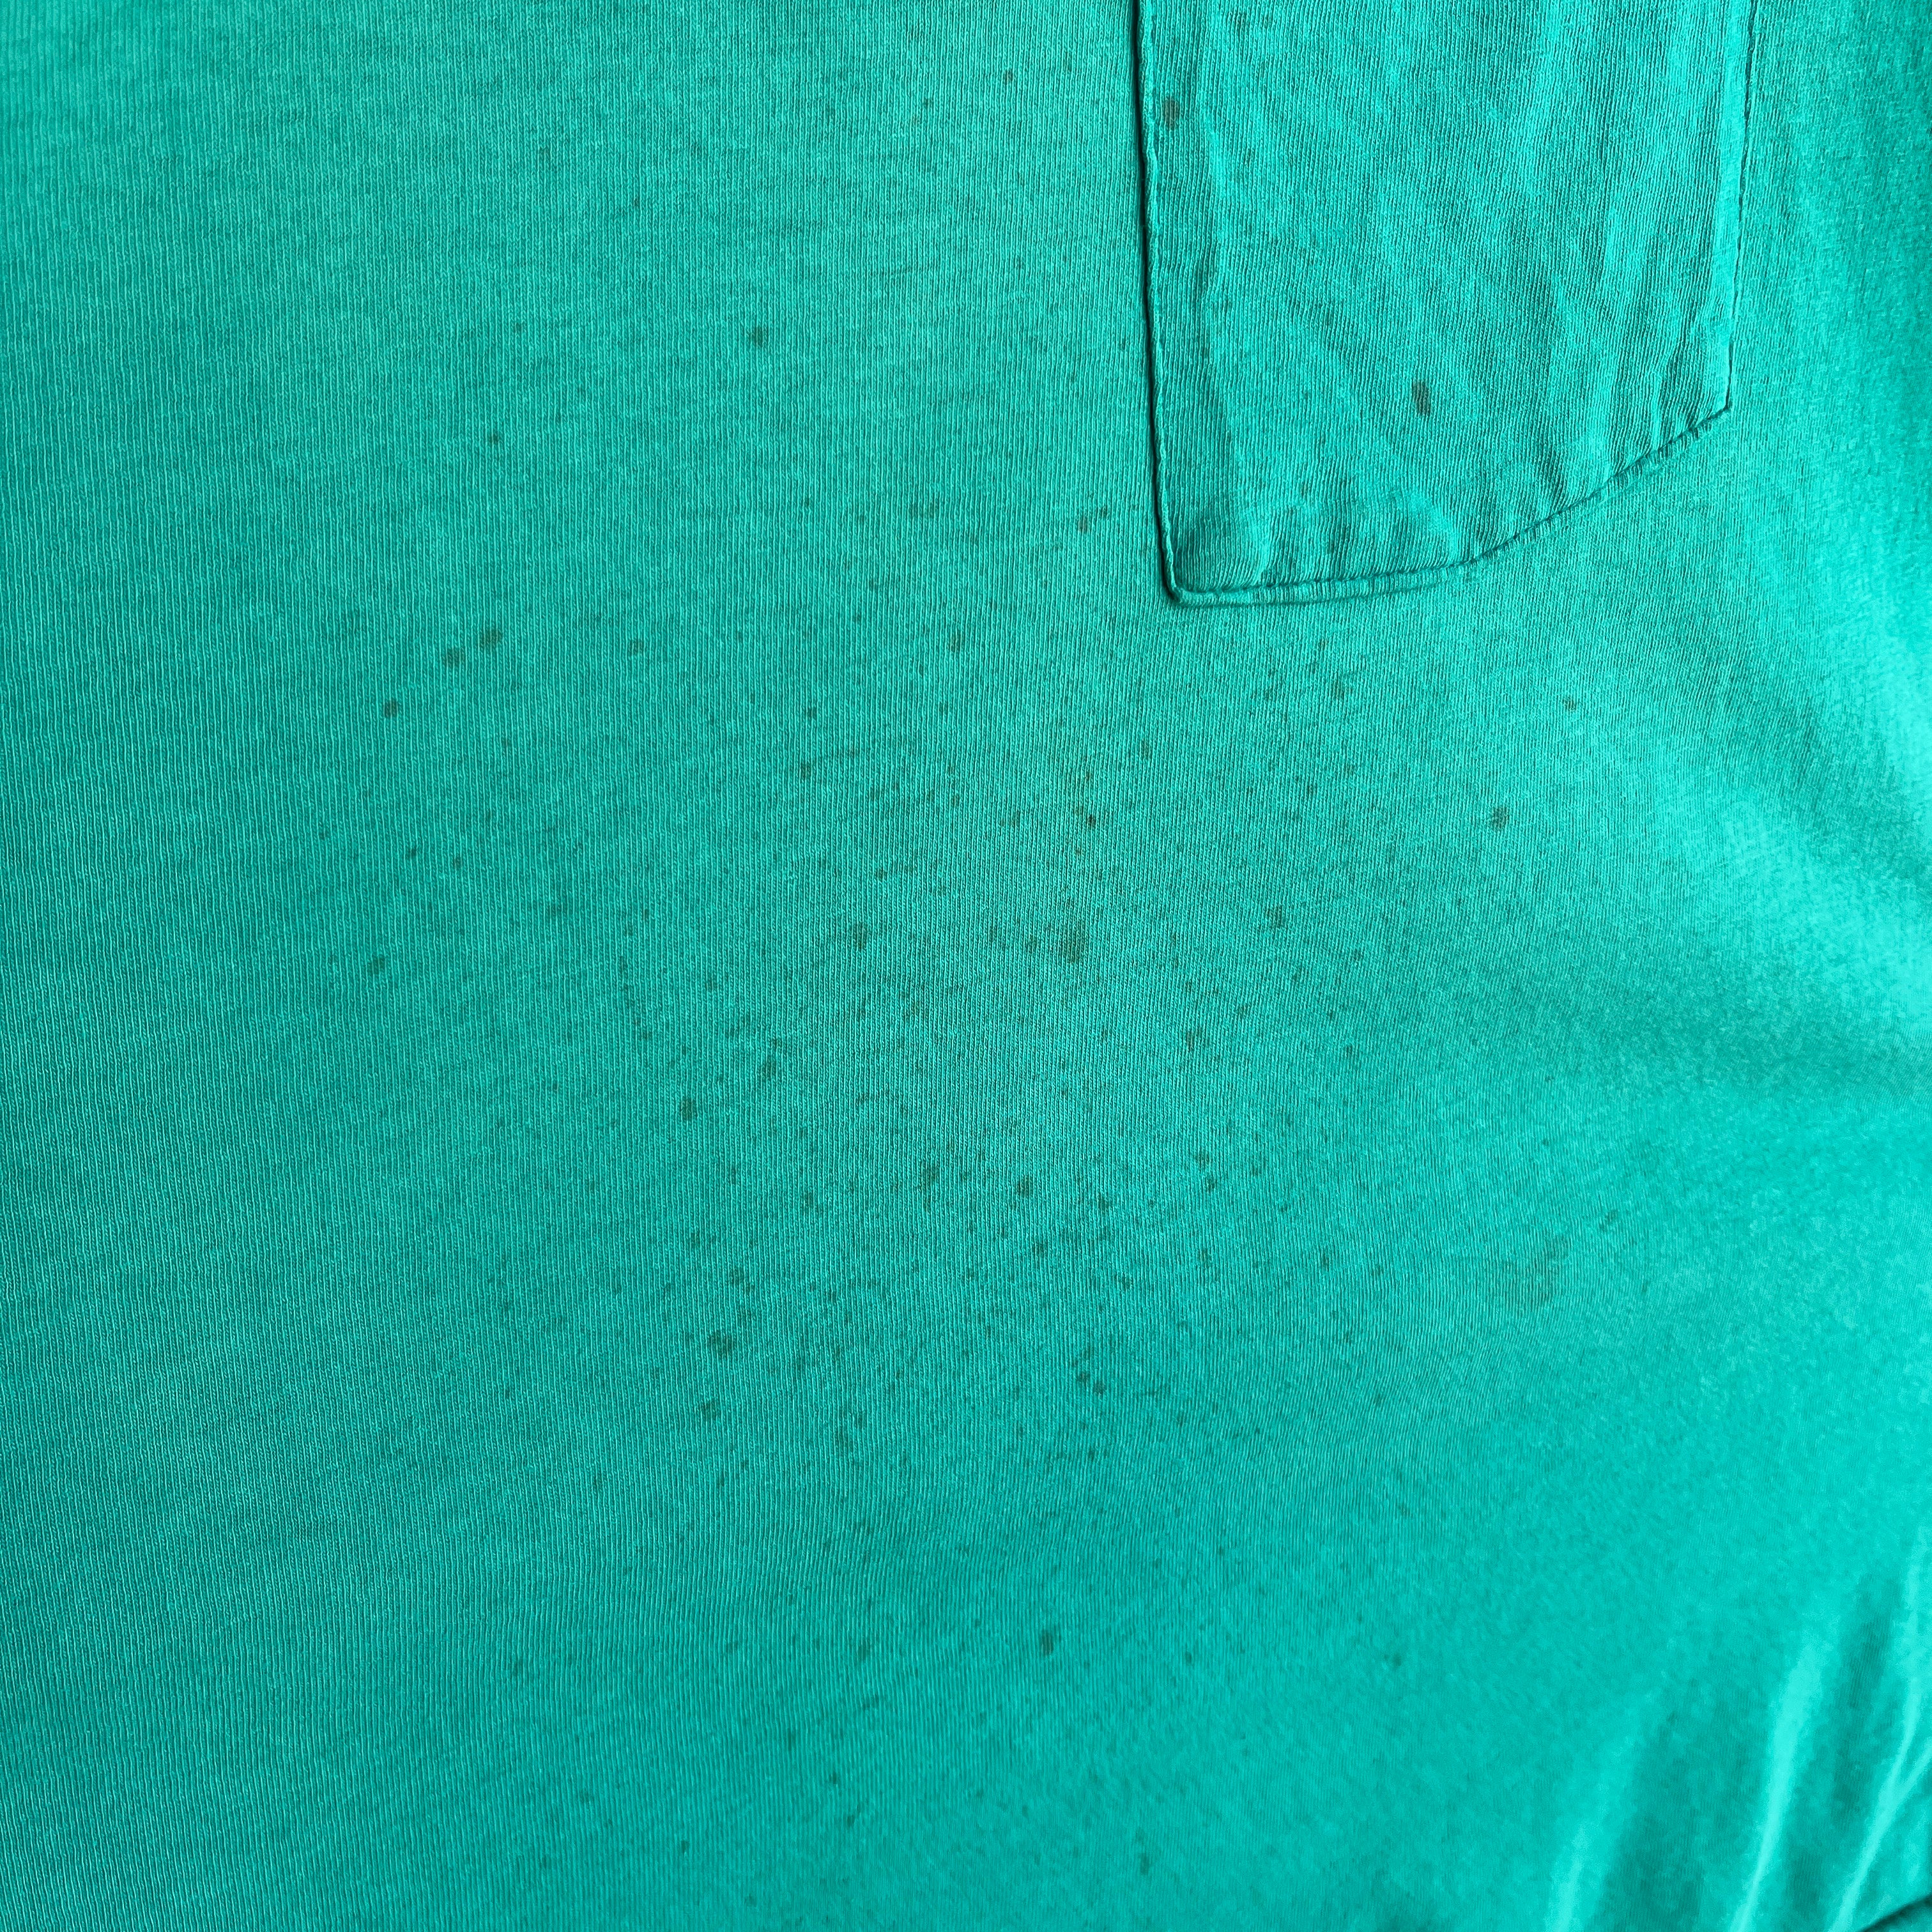 1980s Dumpster Chic Selvedge Pocket Azure Blue-Green T-shirt